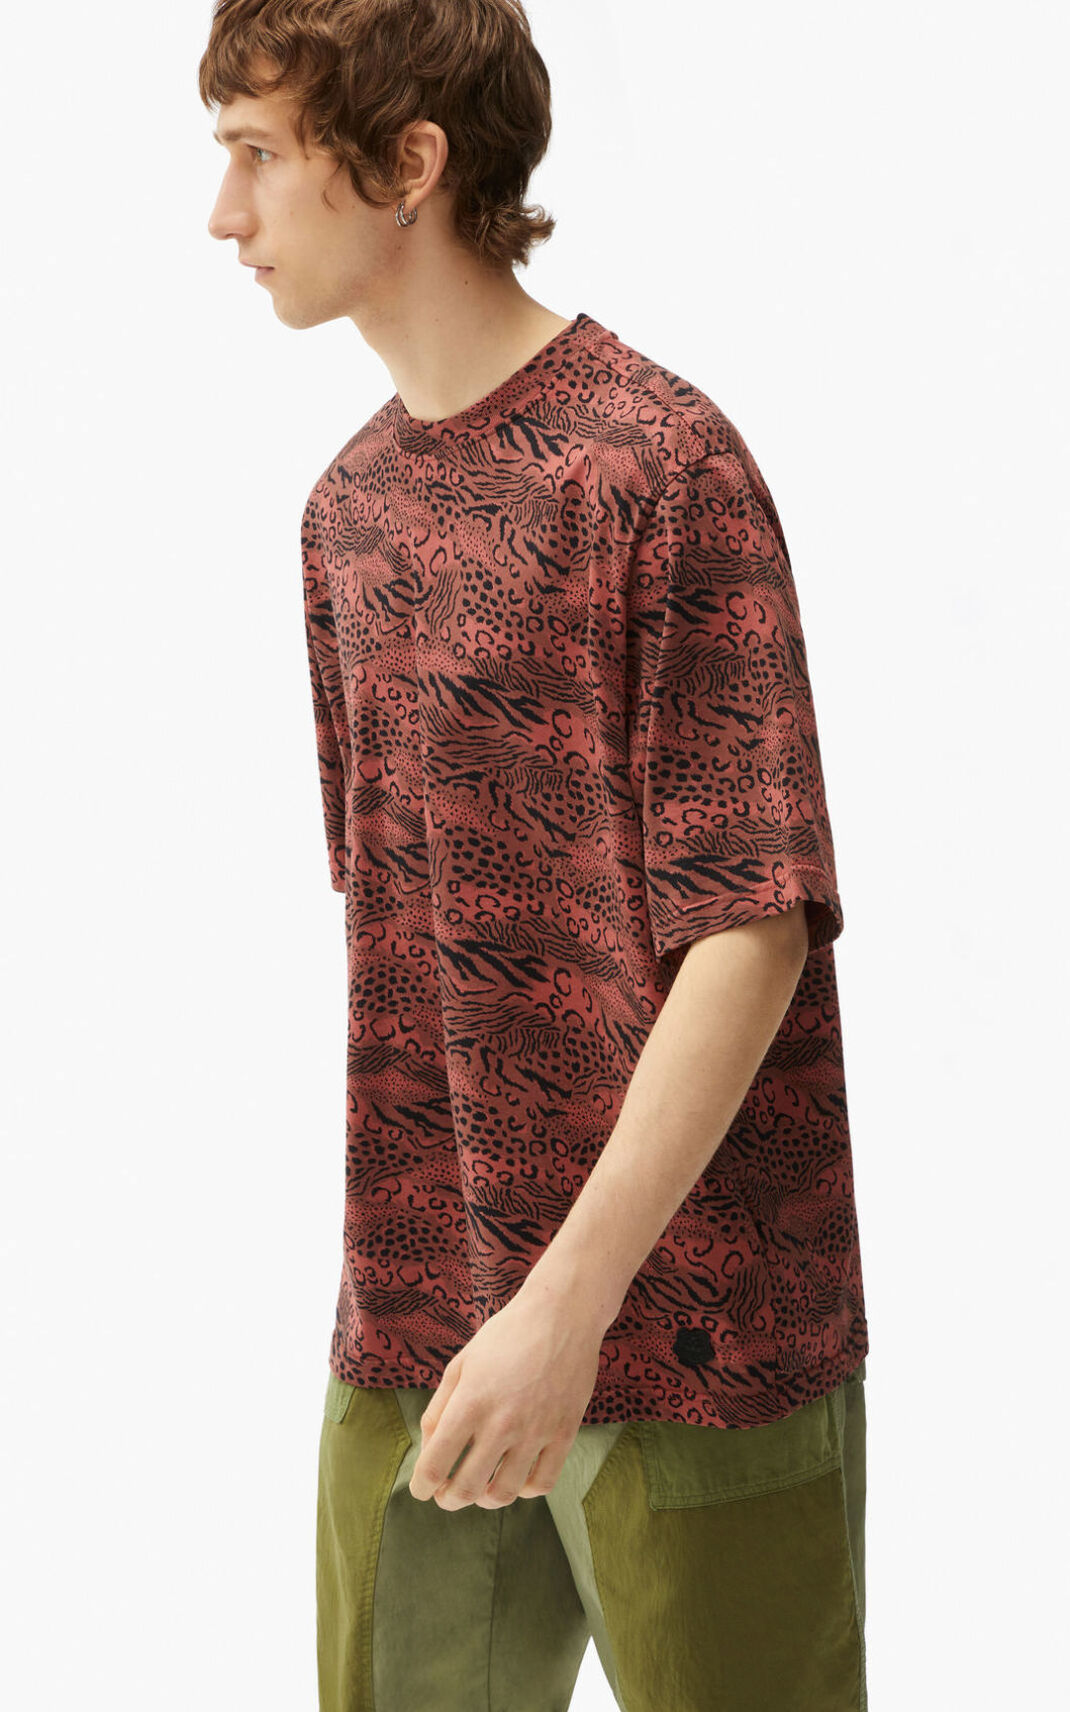 Camisetas Kenzo Leopard Hombre Rosas Oscuro - SKU.5150045